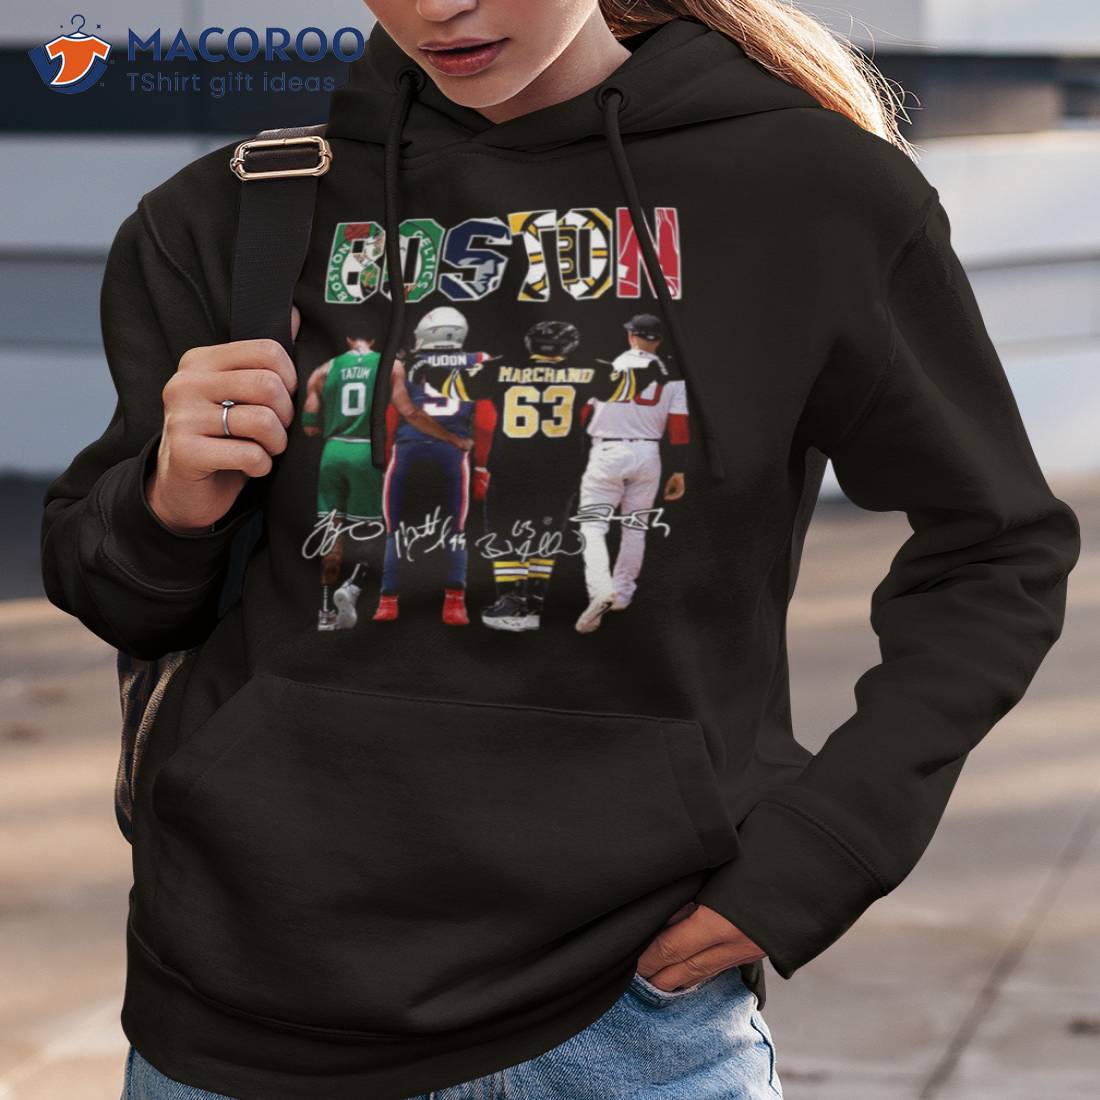 red sox boston marathon sweatshirt